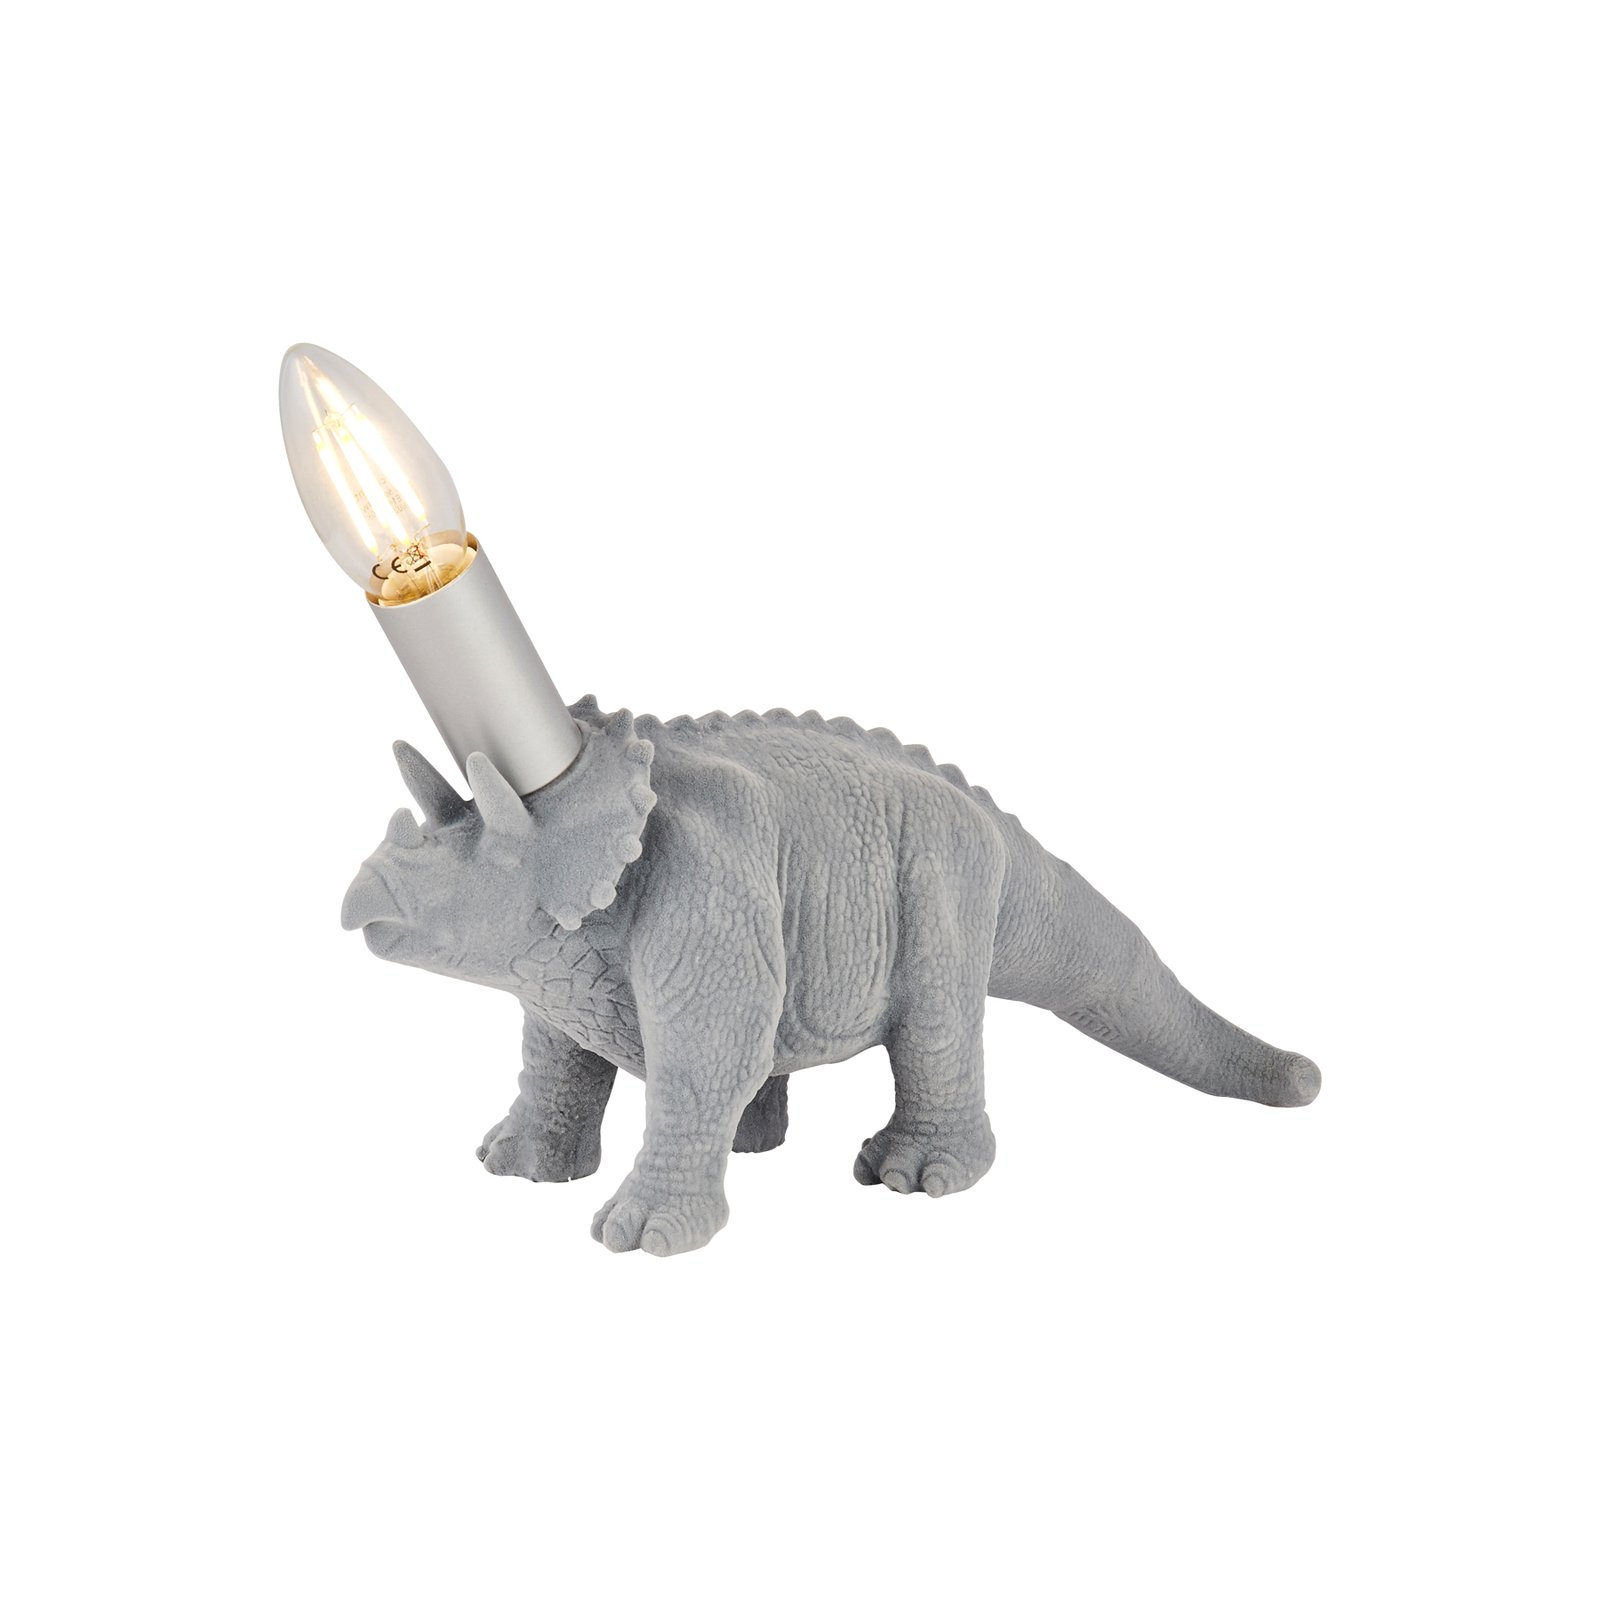 Table lamp X Triceratops, ceramic